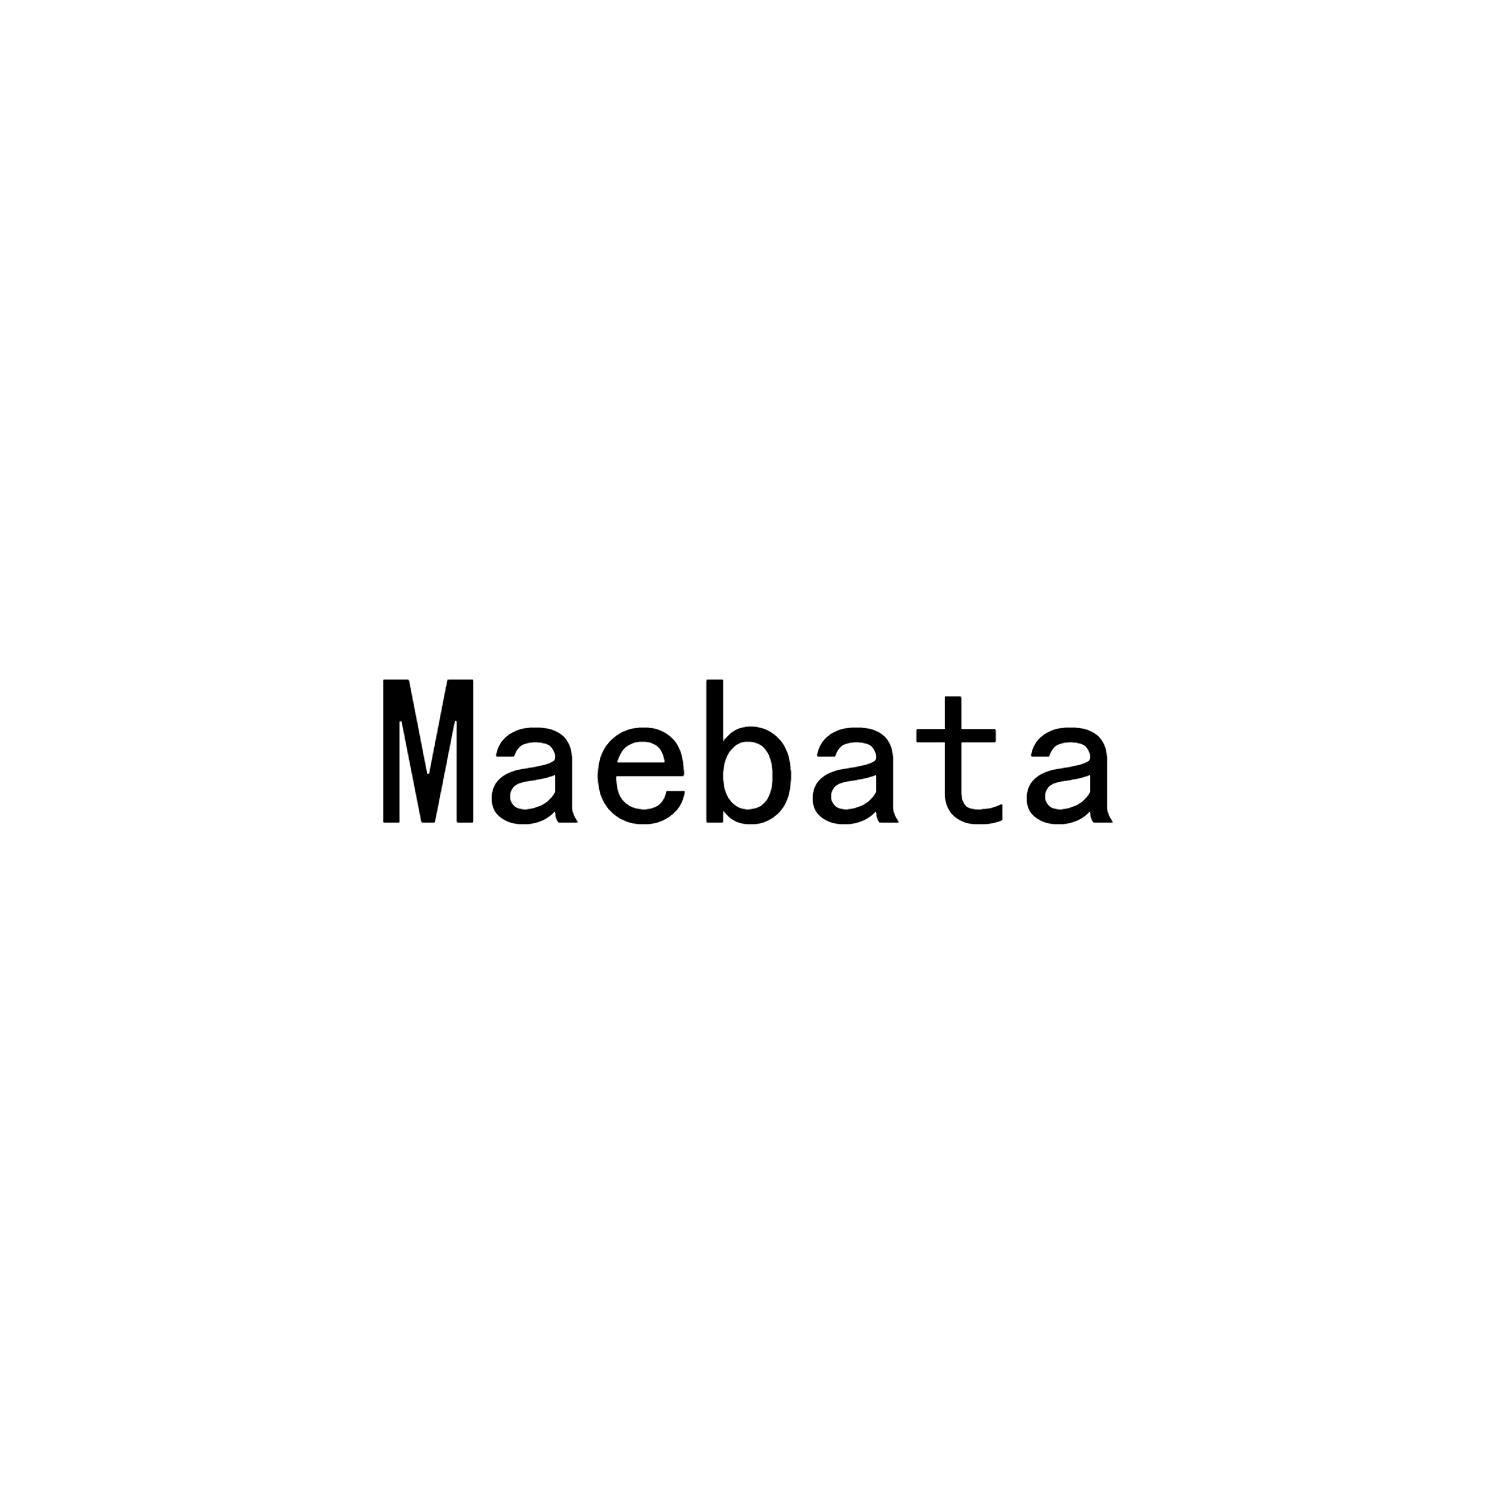 Maebata